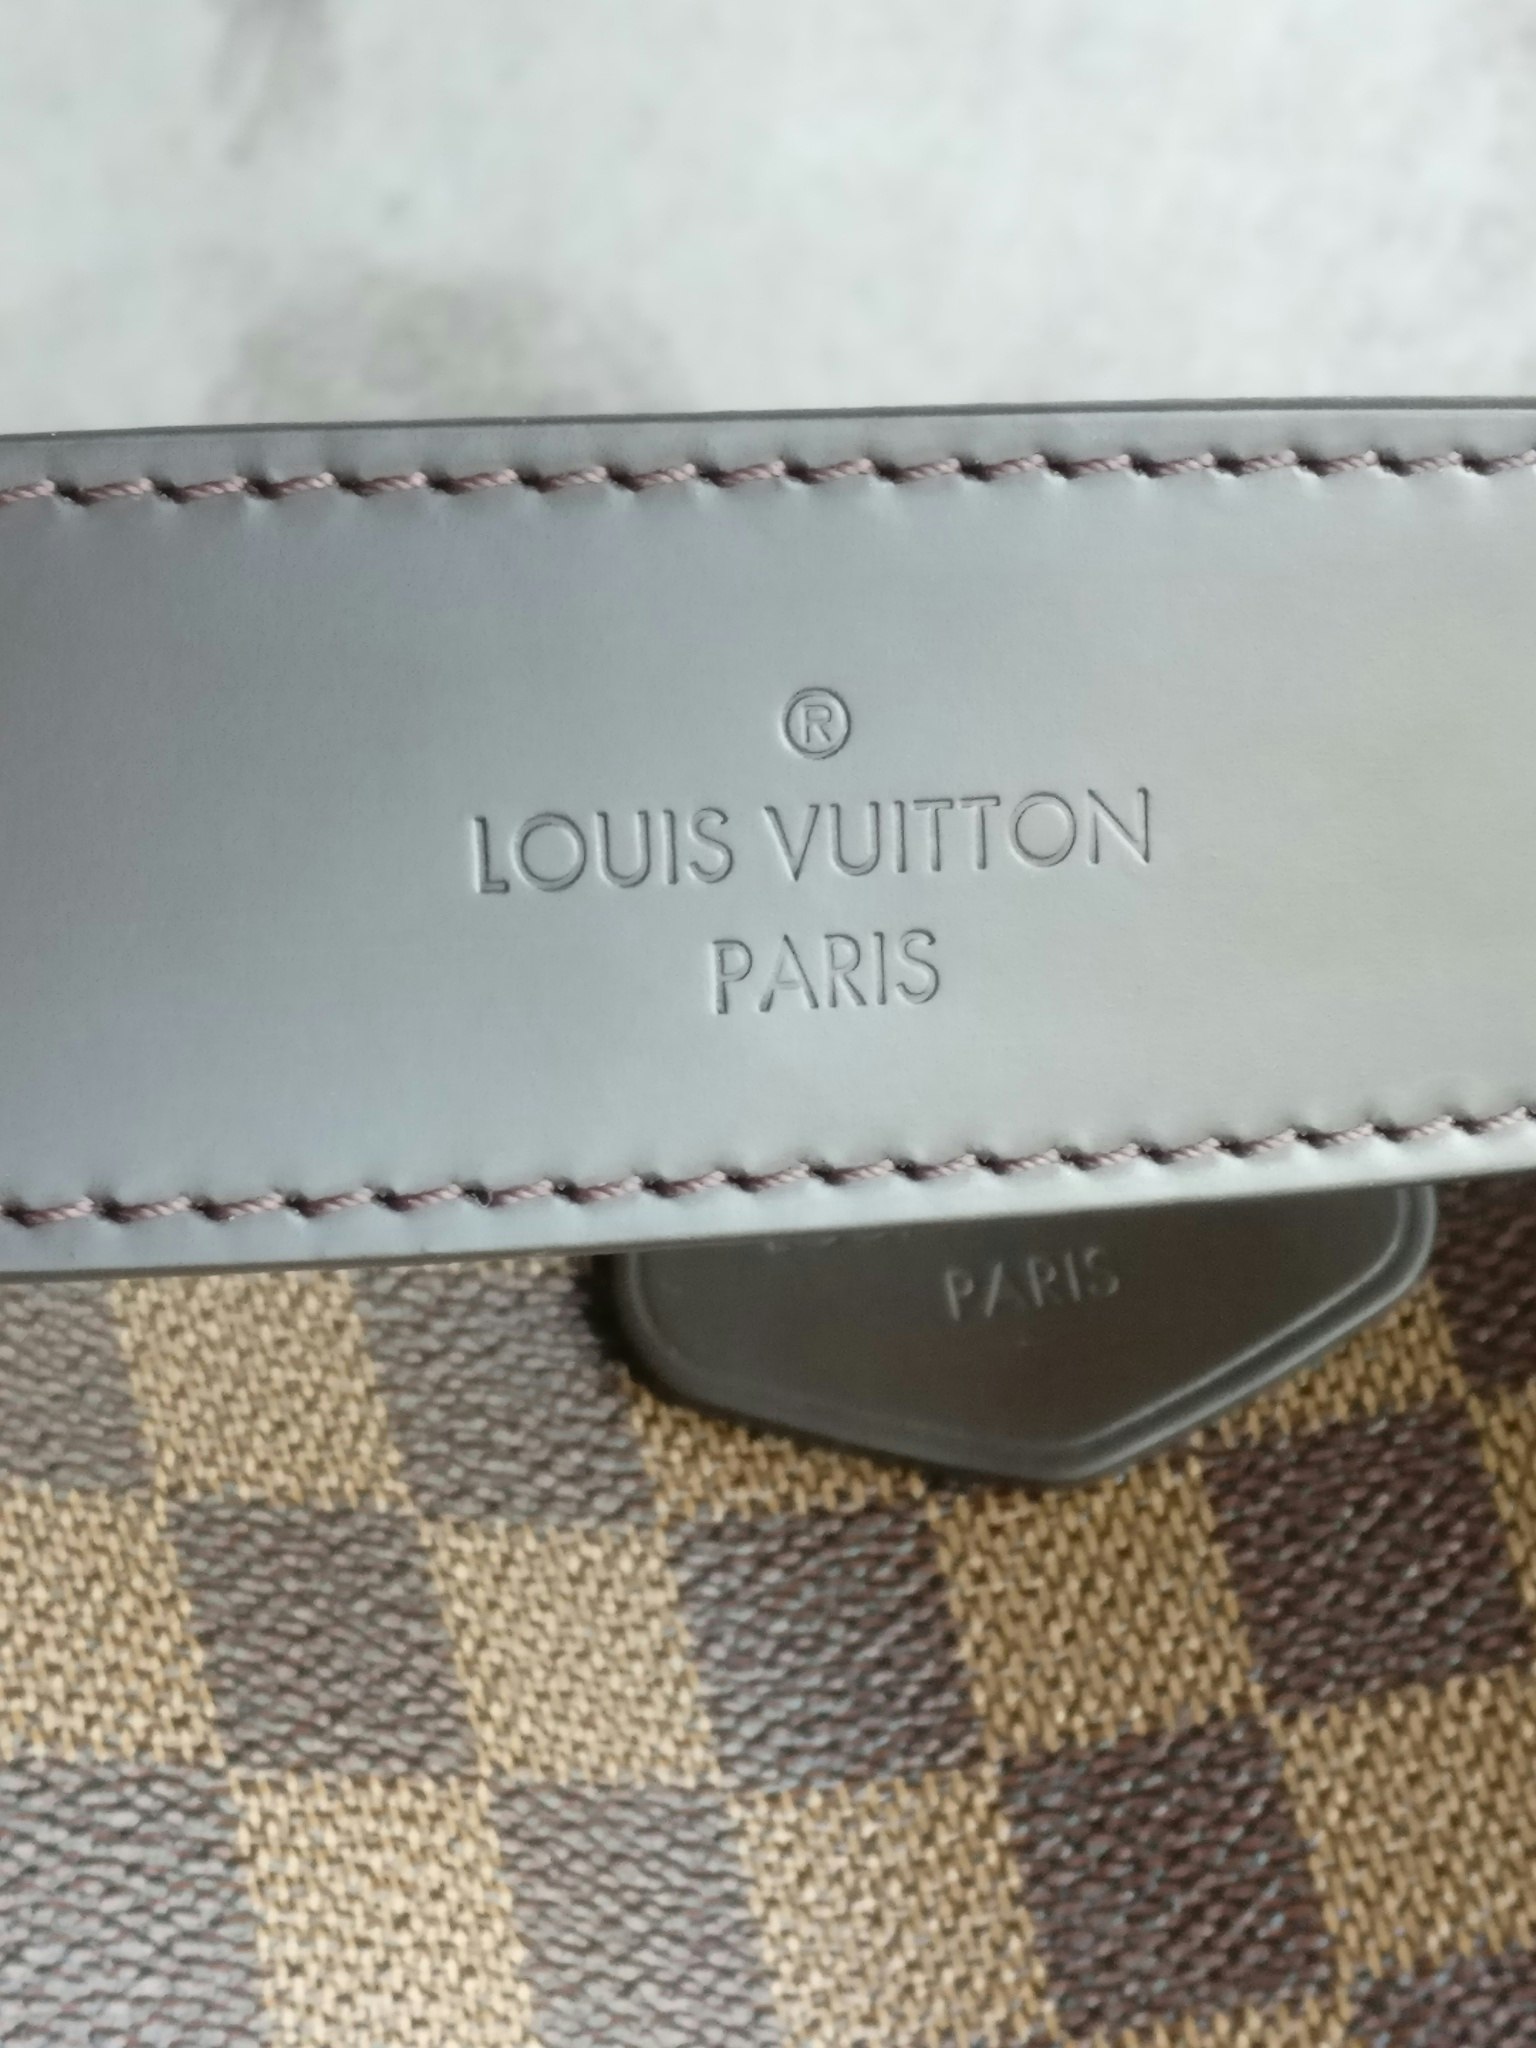 Louis Vuitton Graceful MM damier ebene